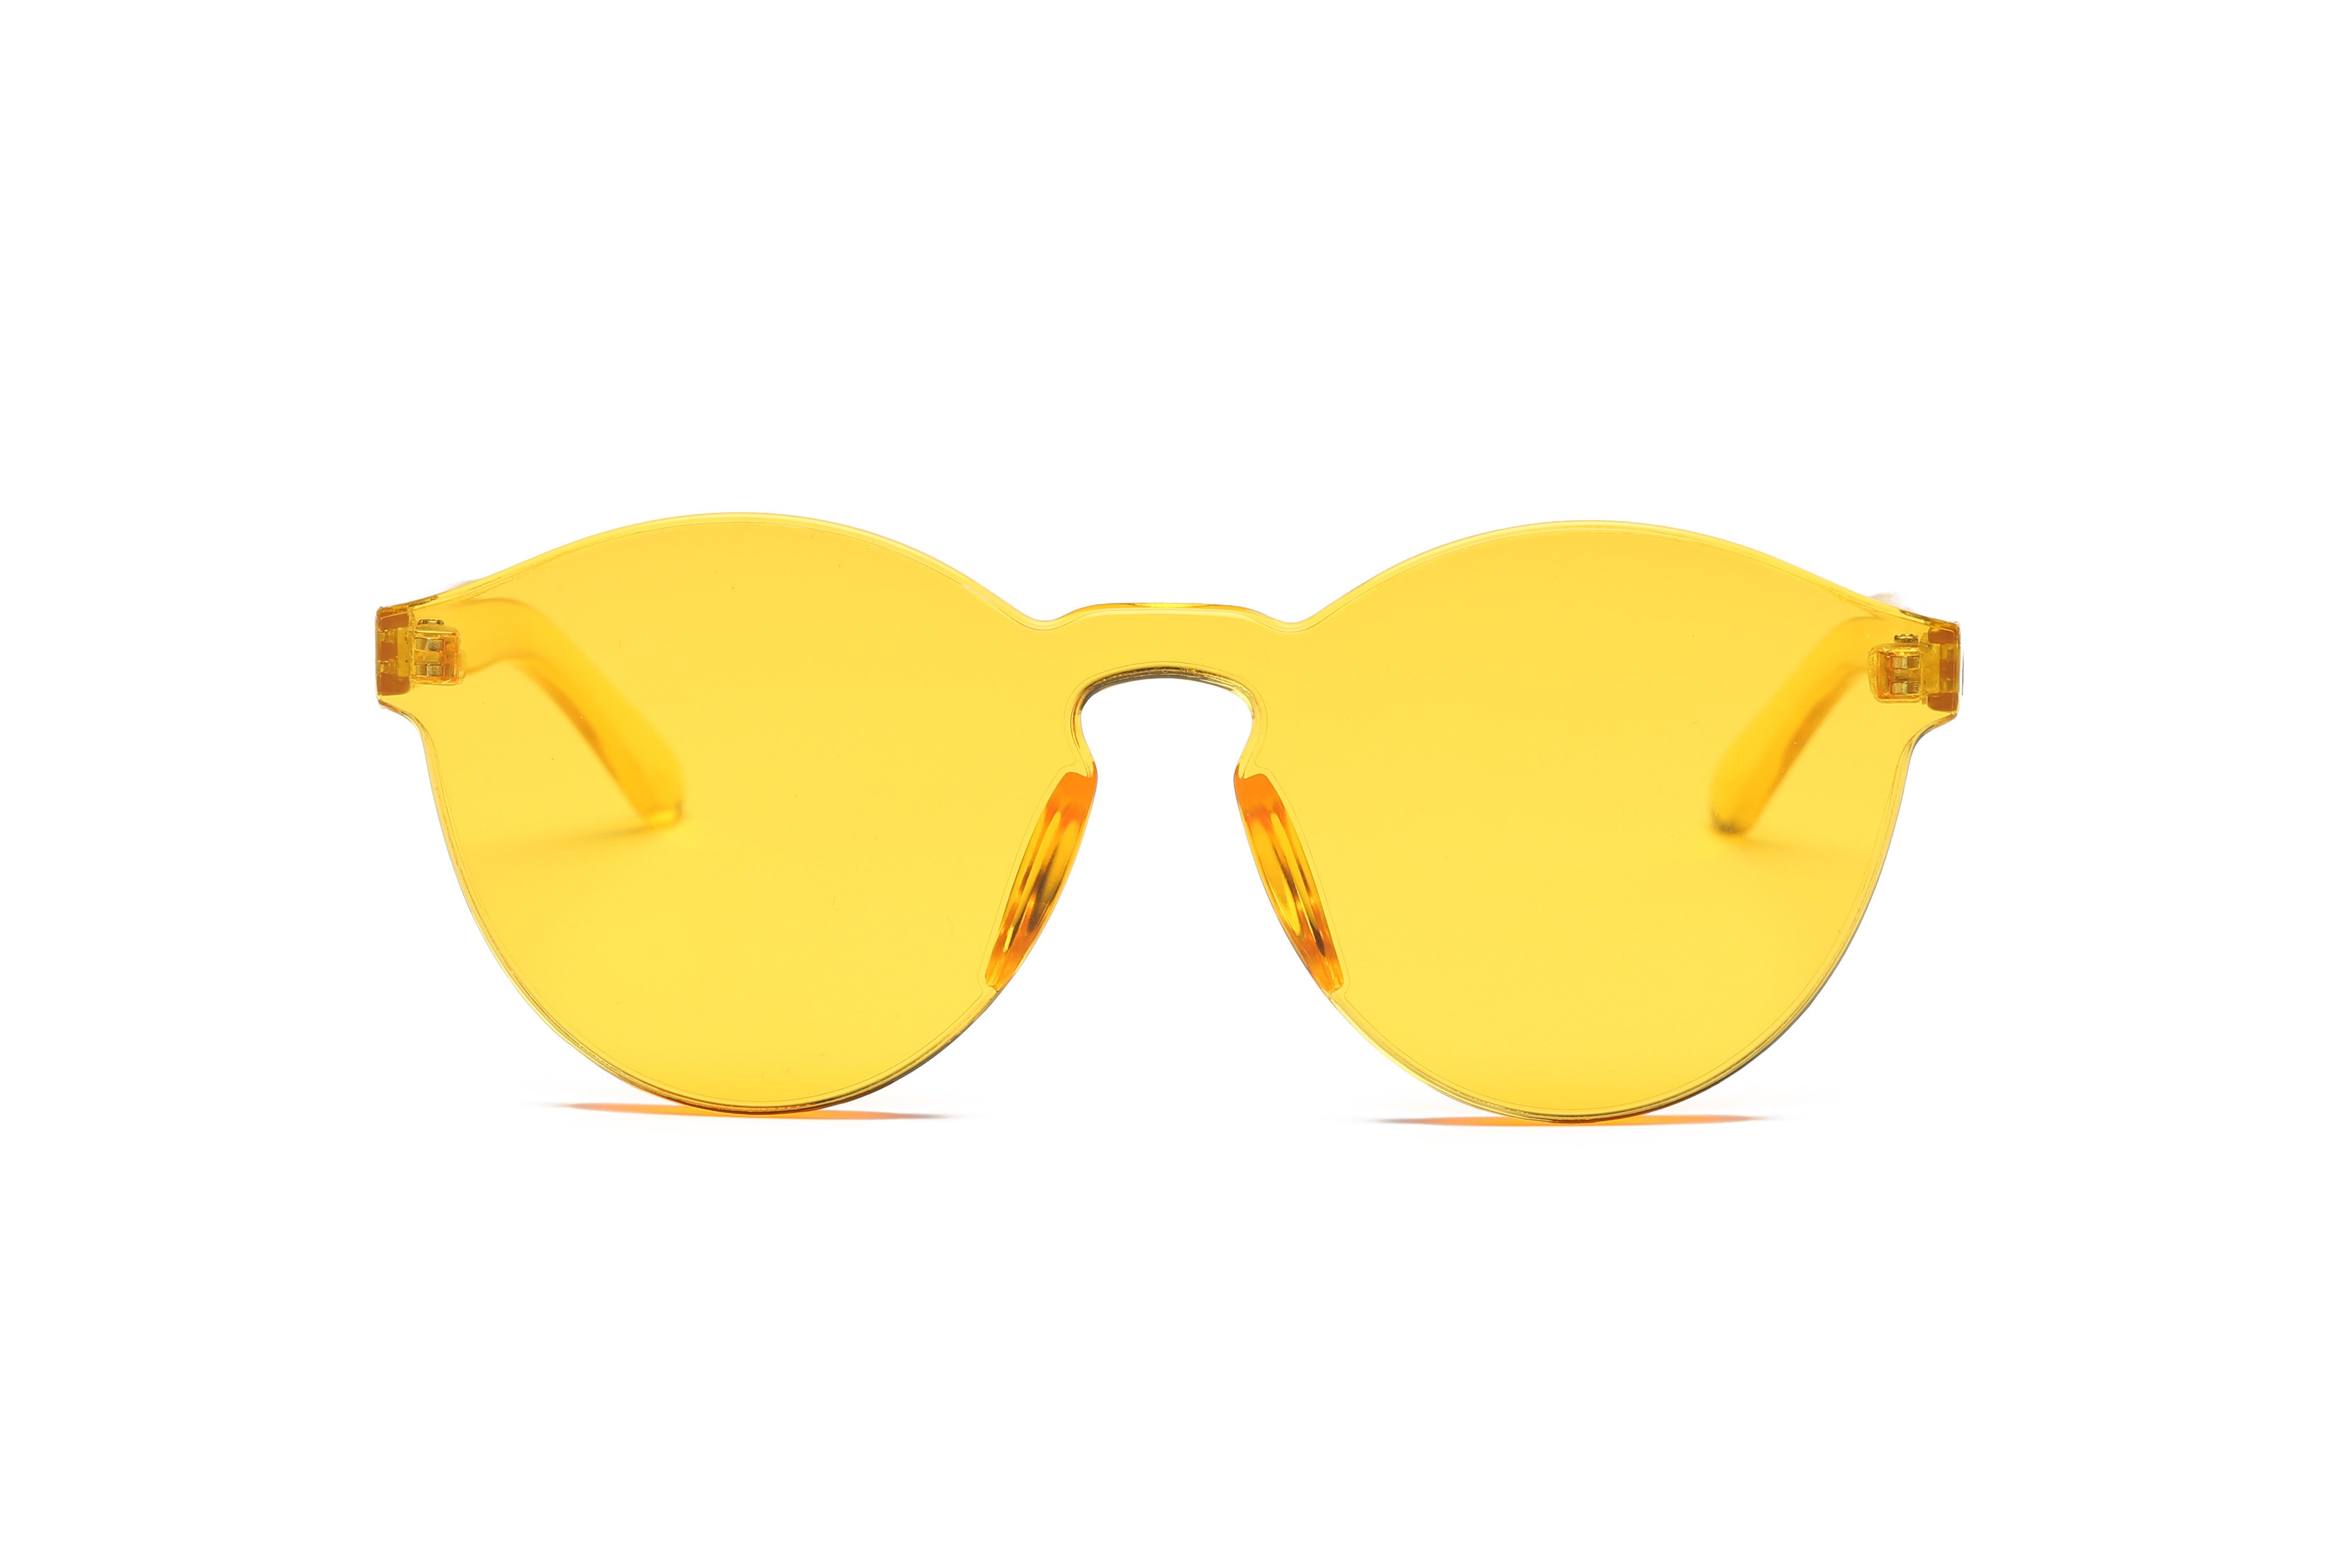 S2005 - Hipster Translucent Monochromatic Sunglasses - Iris Fashion Inc. | Wholesale Sunglasses and Glasses